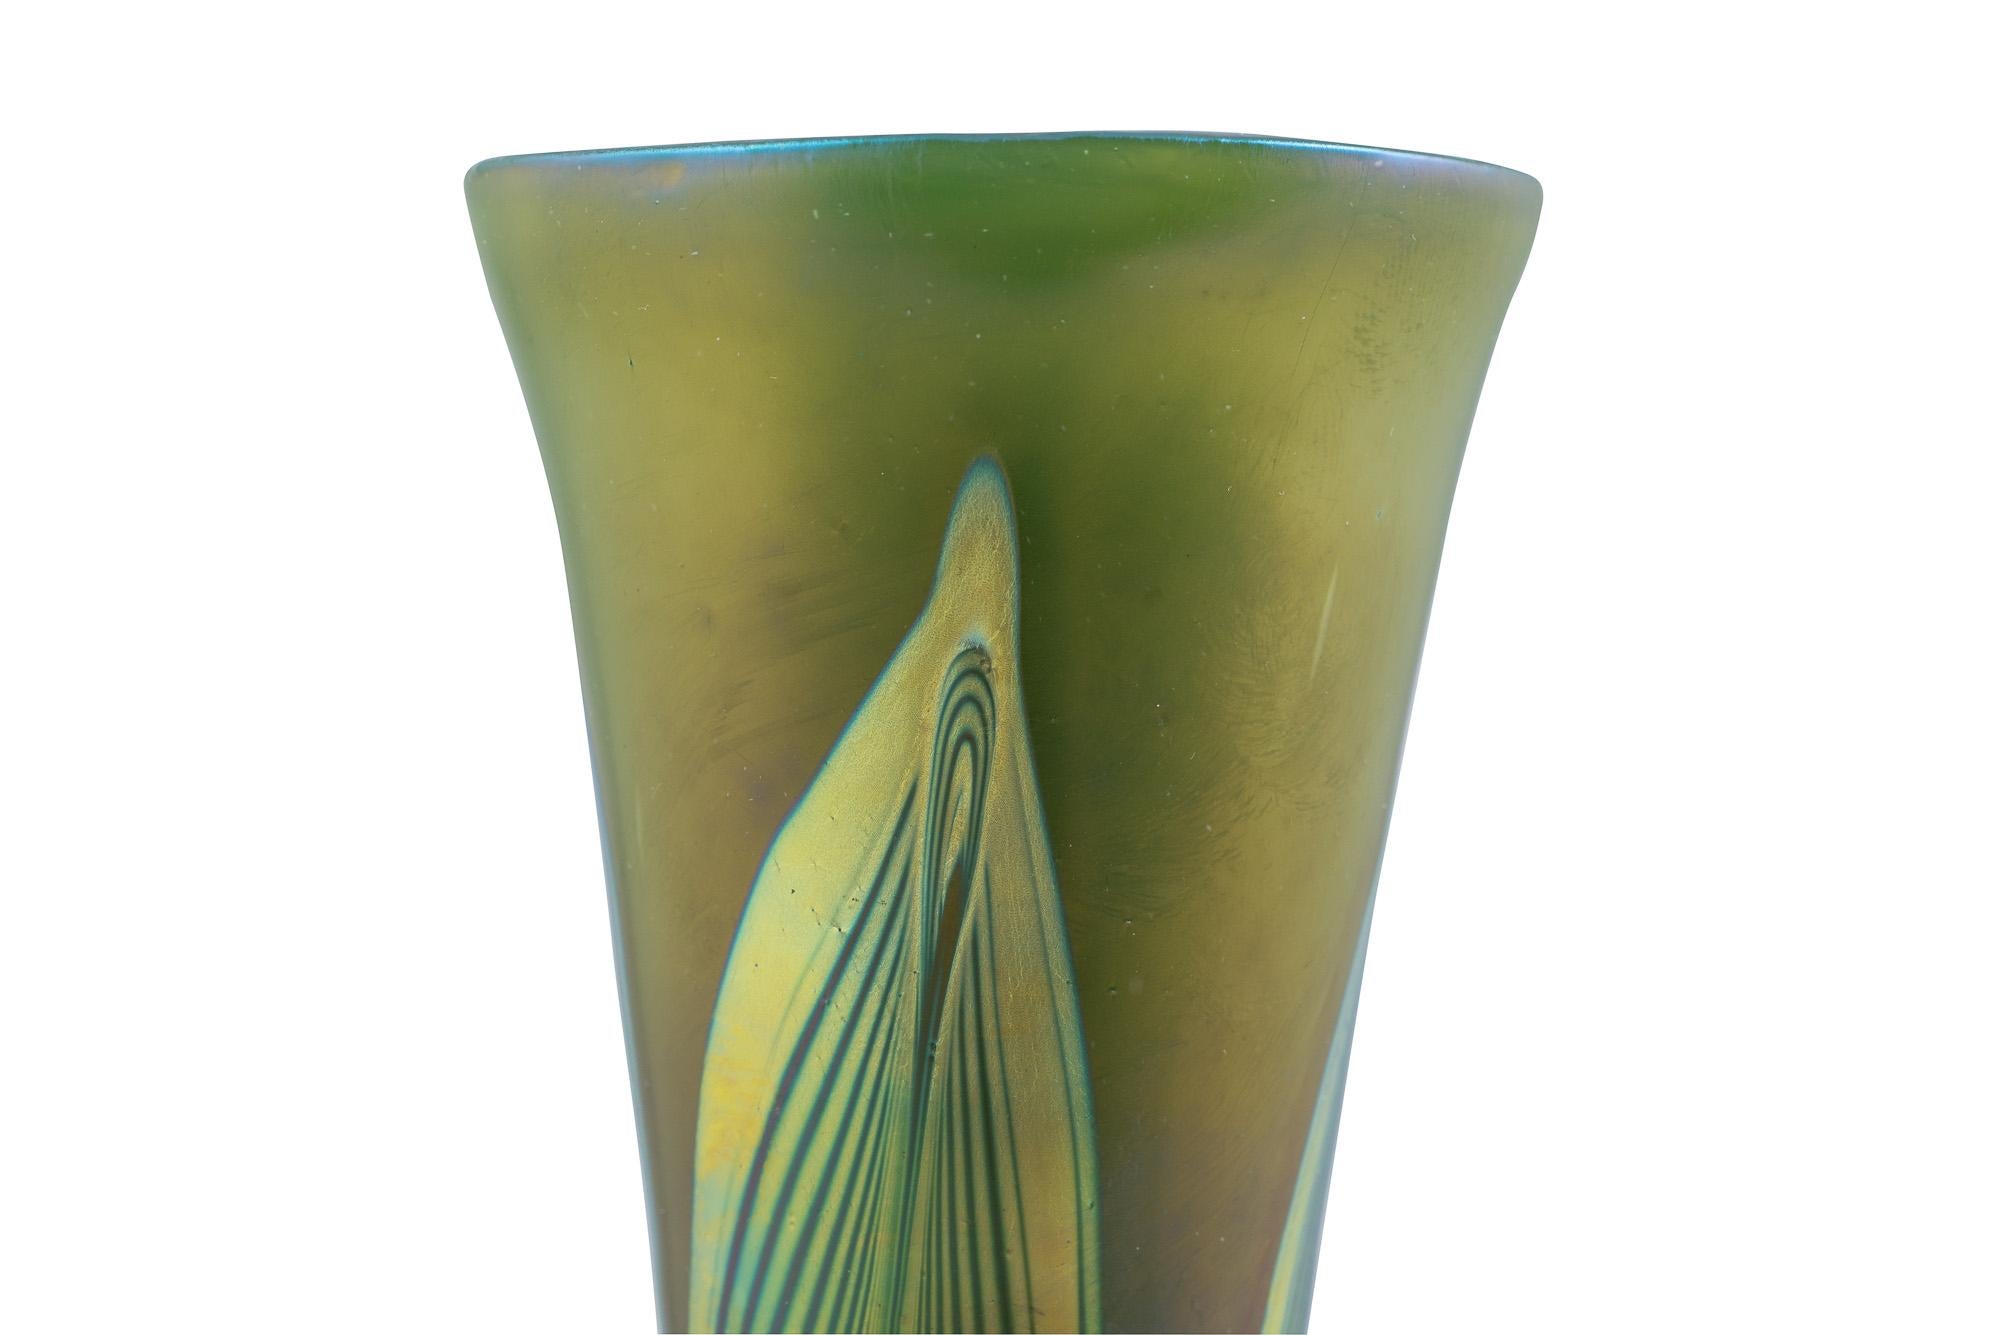 Late 19th Century Early Signed Loetz Vase circa 1898 Phenomen Gre 166 Russian Green